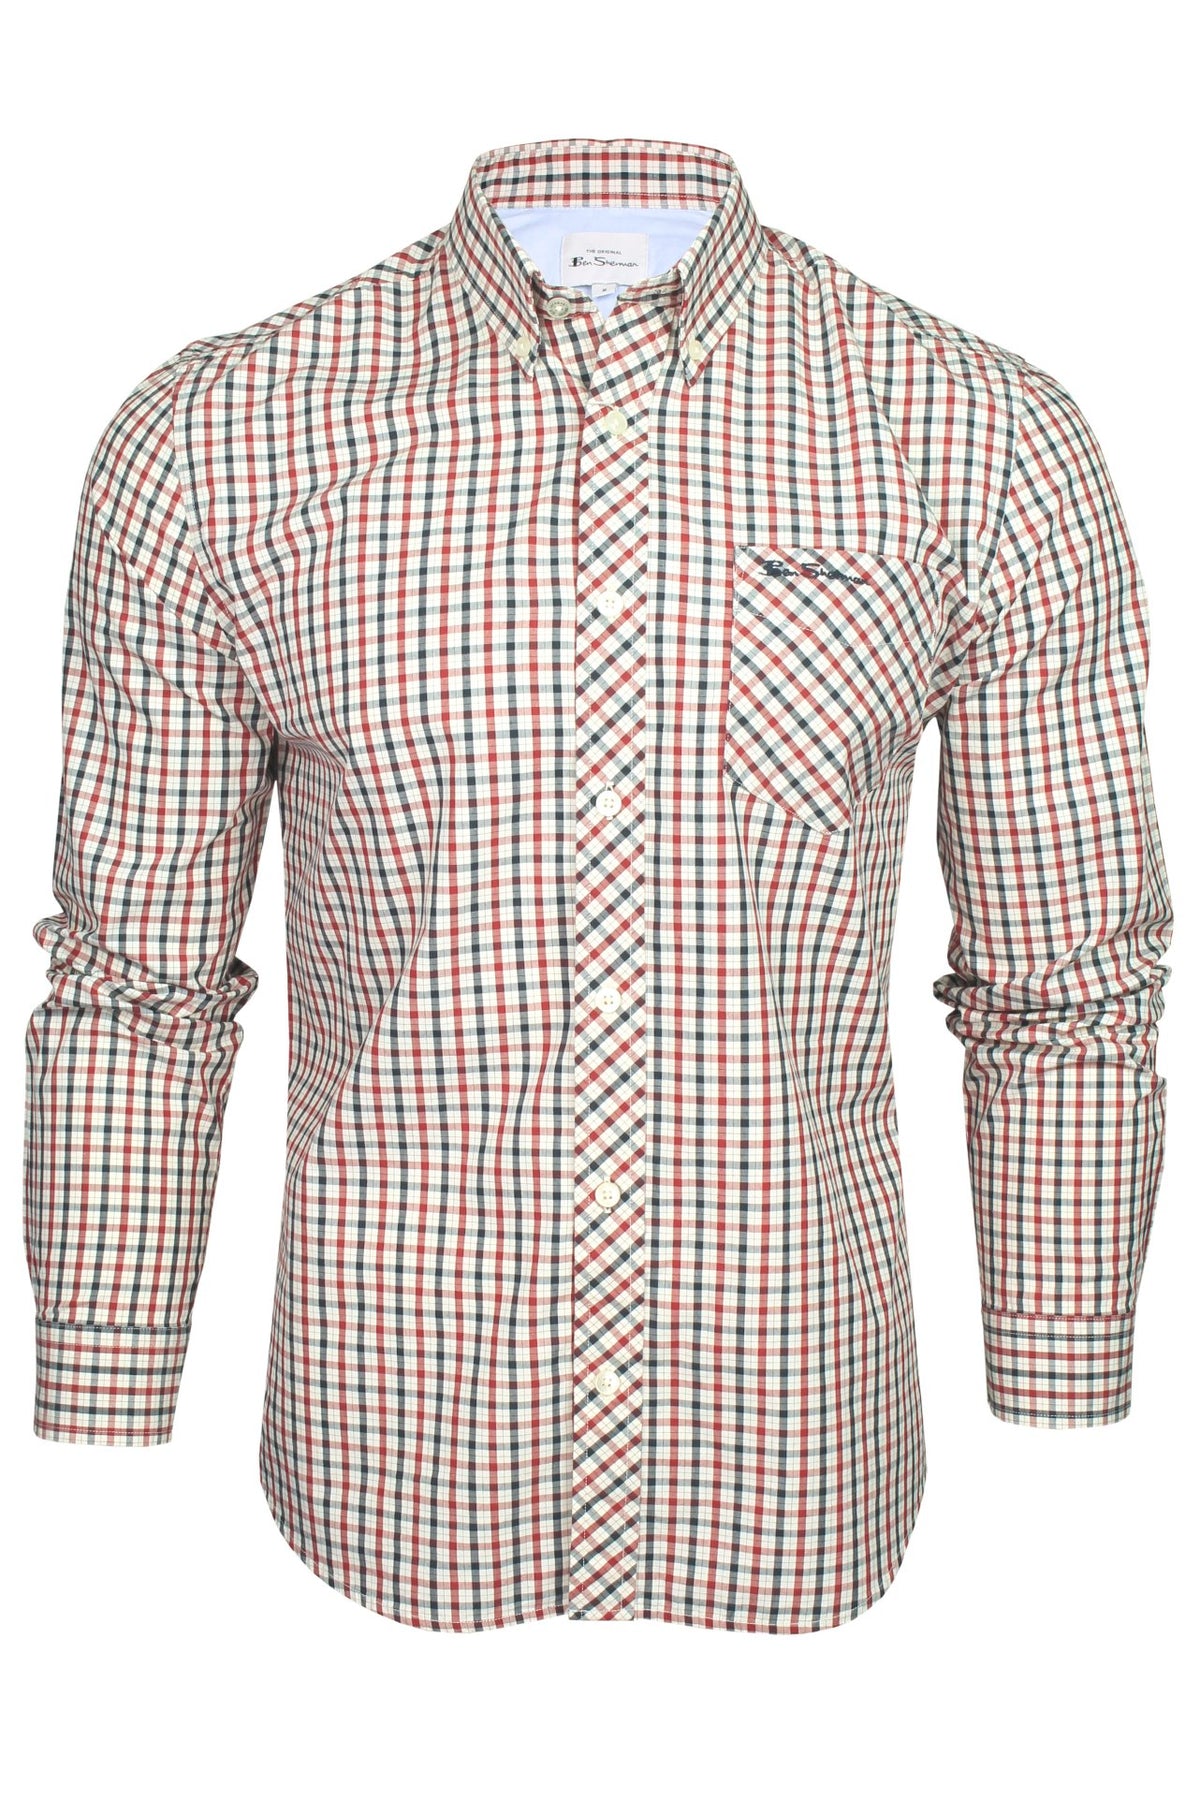 Ben Sherman Men's Signature Pocket House Check Shirt, Long Sleeved, 01, 48578, House Check - Red